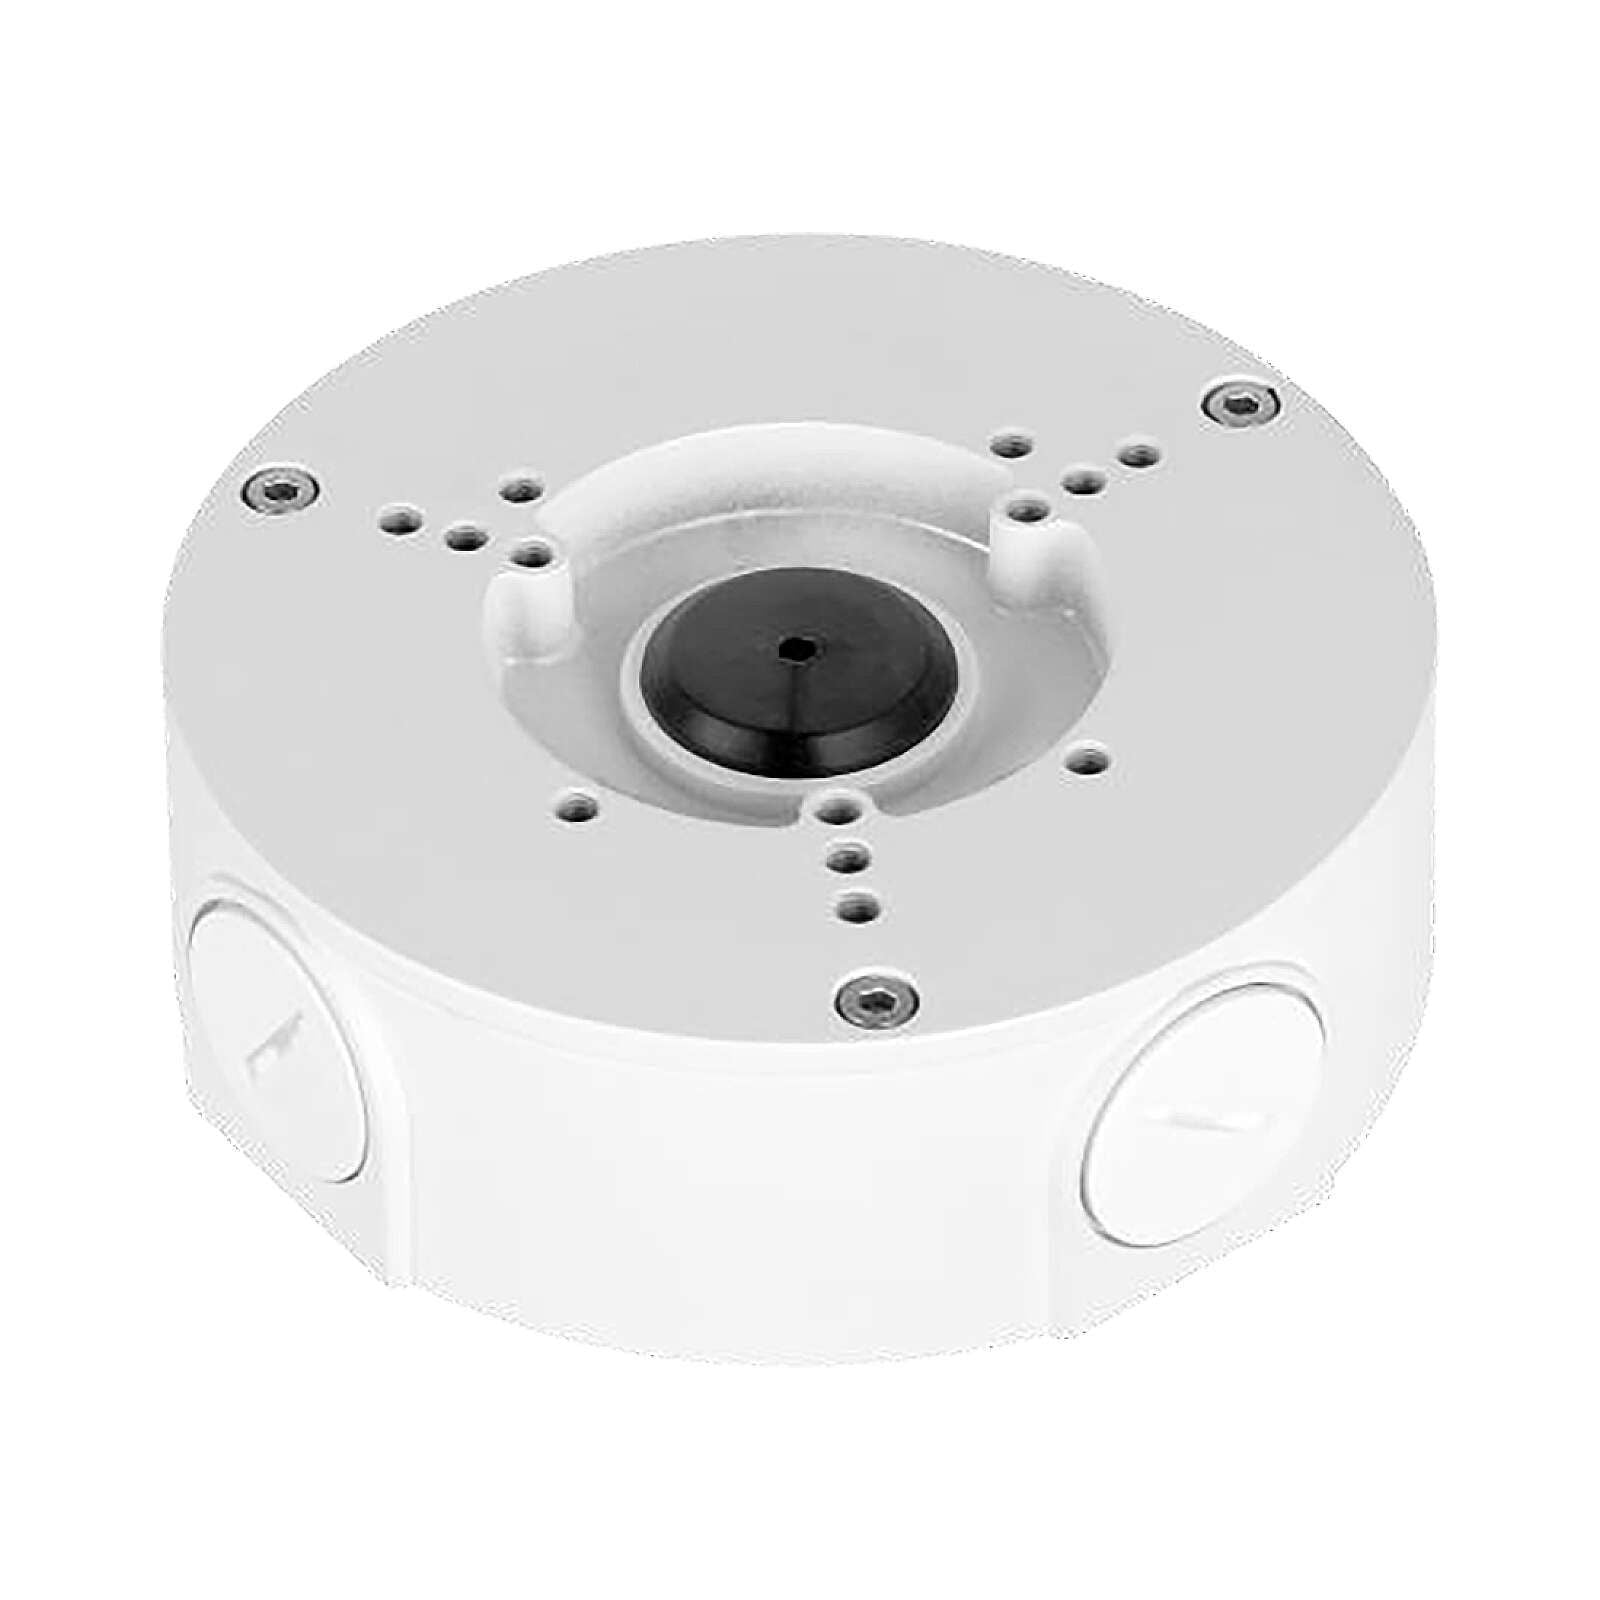 EYEMAX CJB-E130, Junction Box for series E camera support, white color